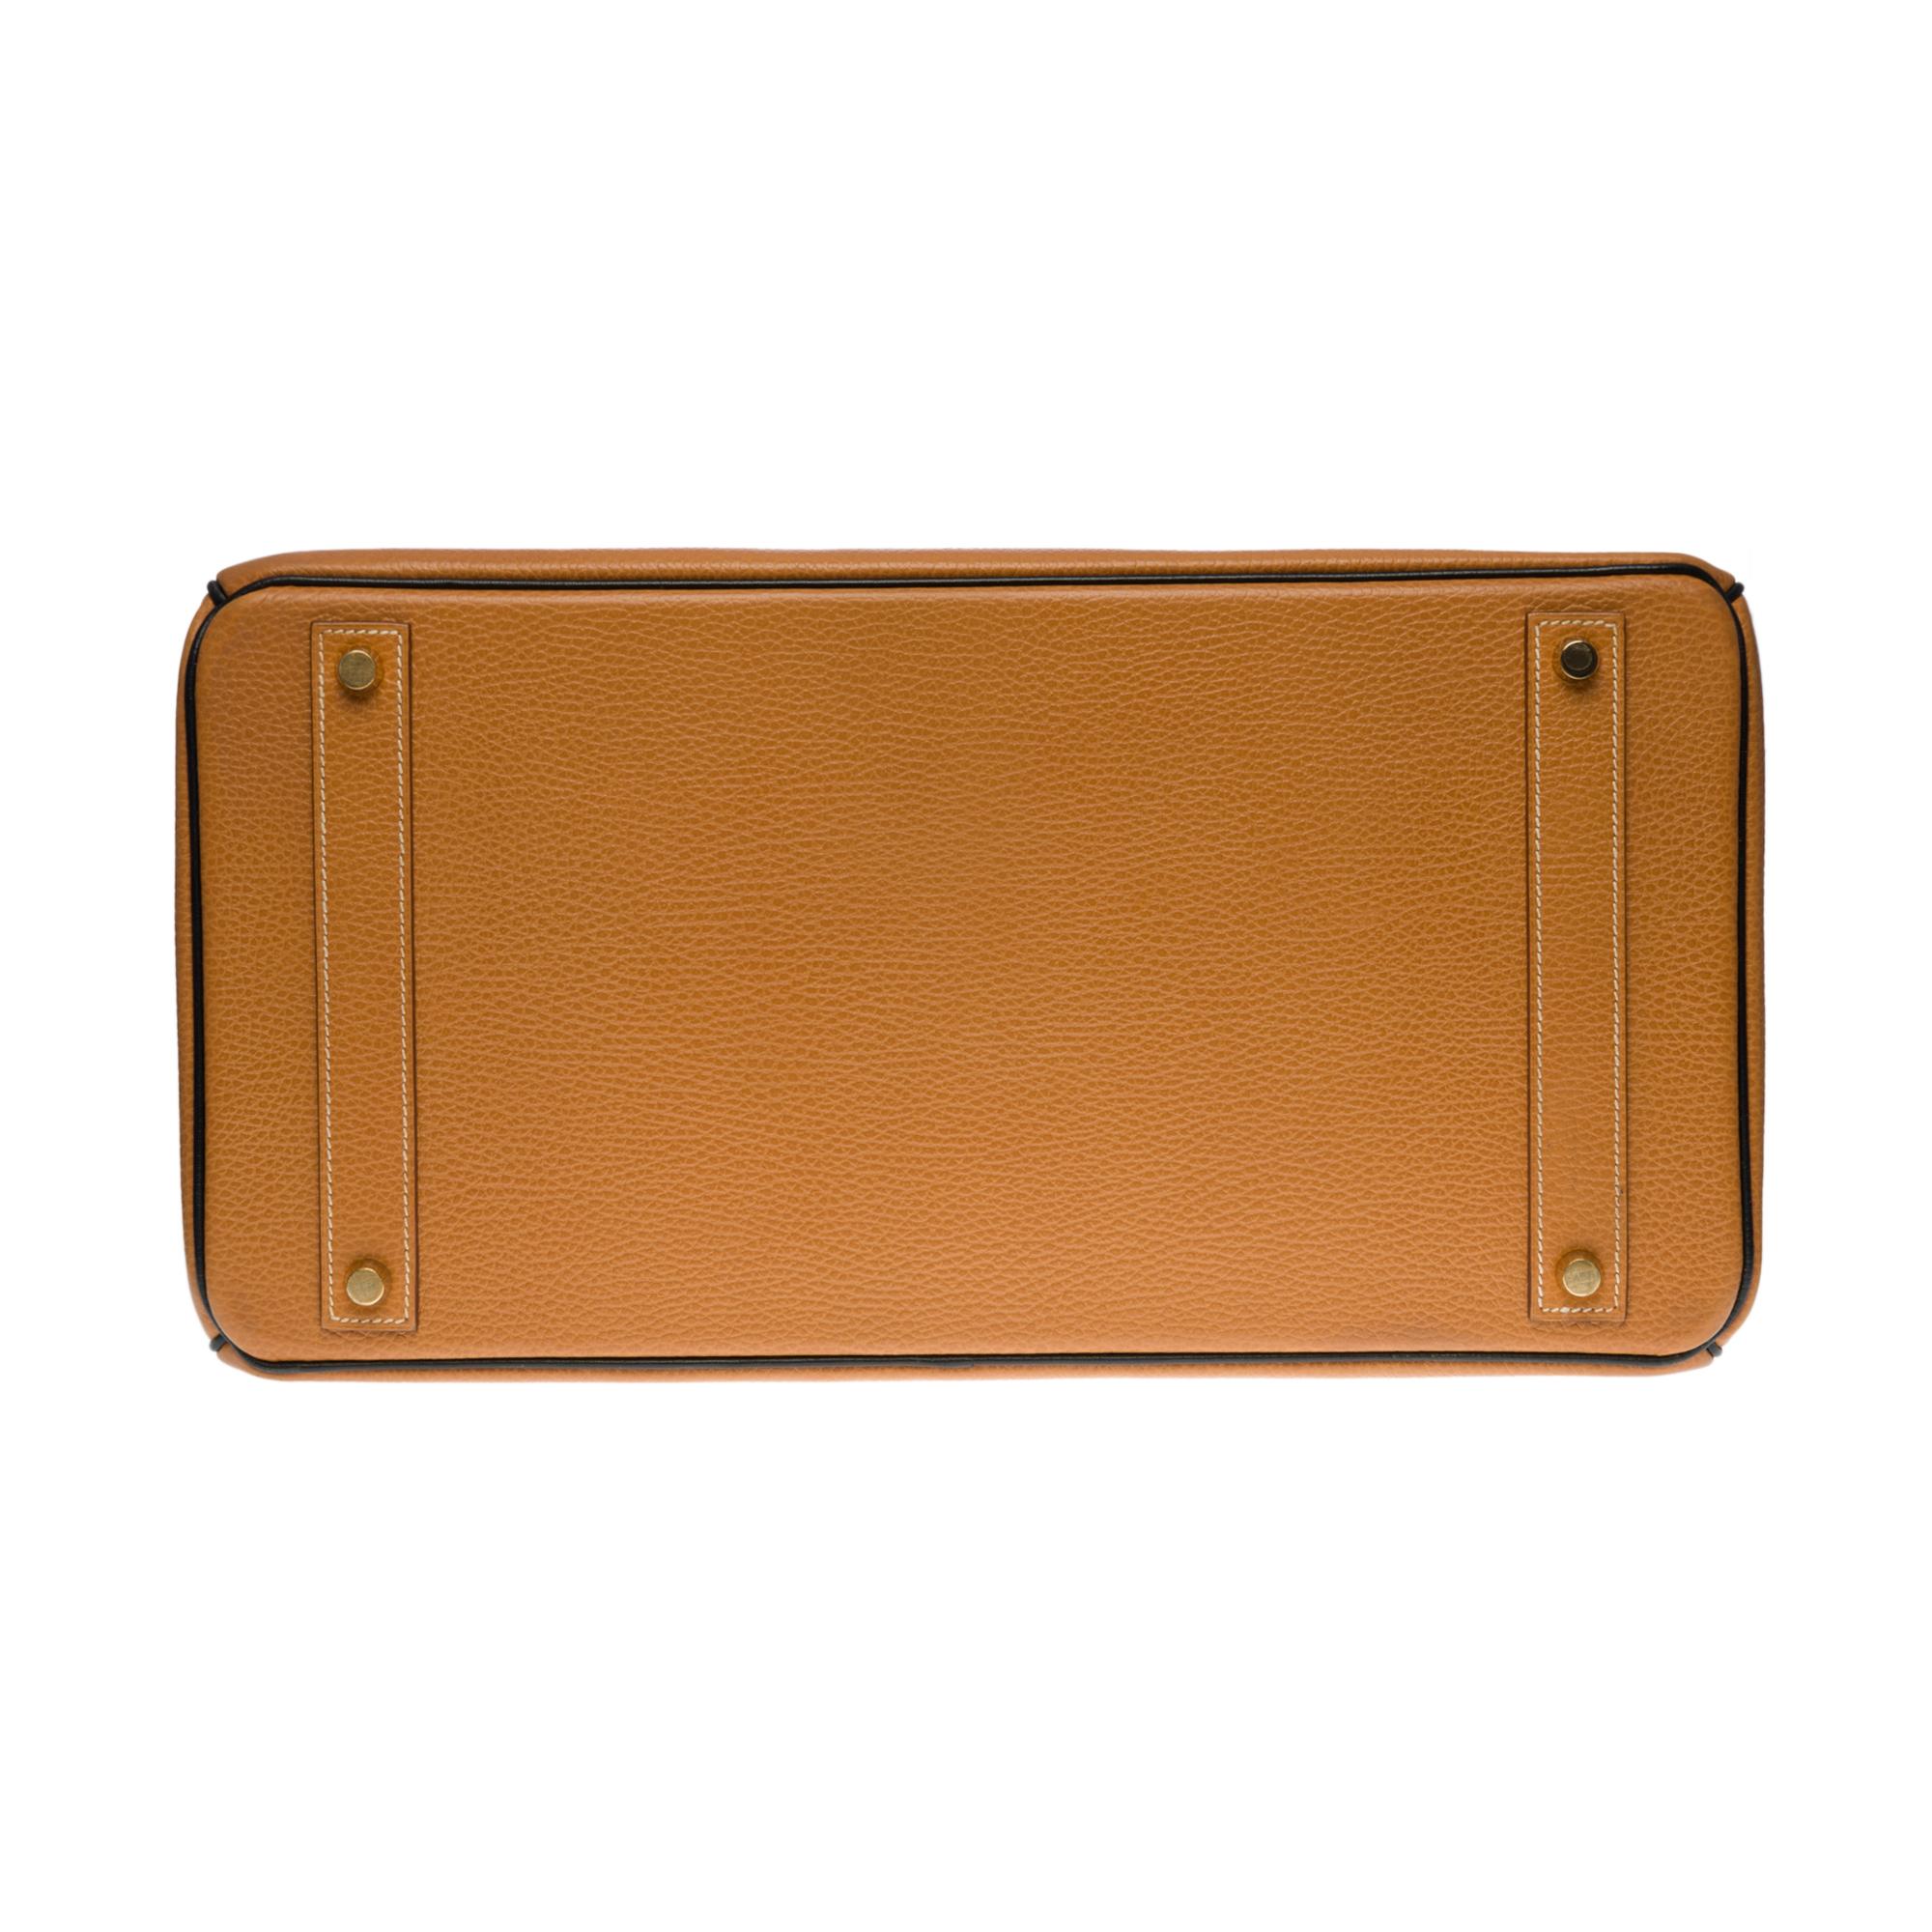 Rare Hermes Birkin 40cm handbag in Gold & black Vache Ardenne leather, GHW 3